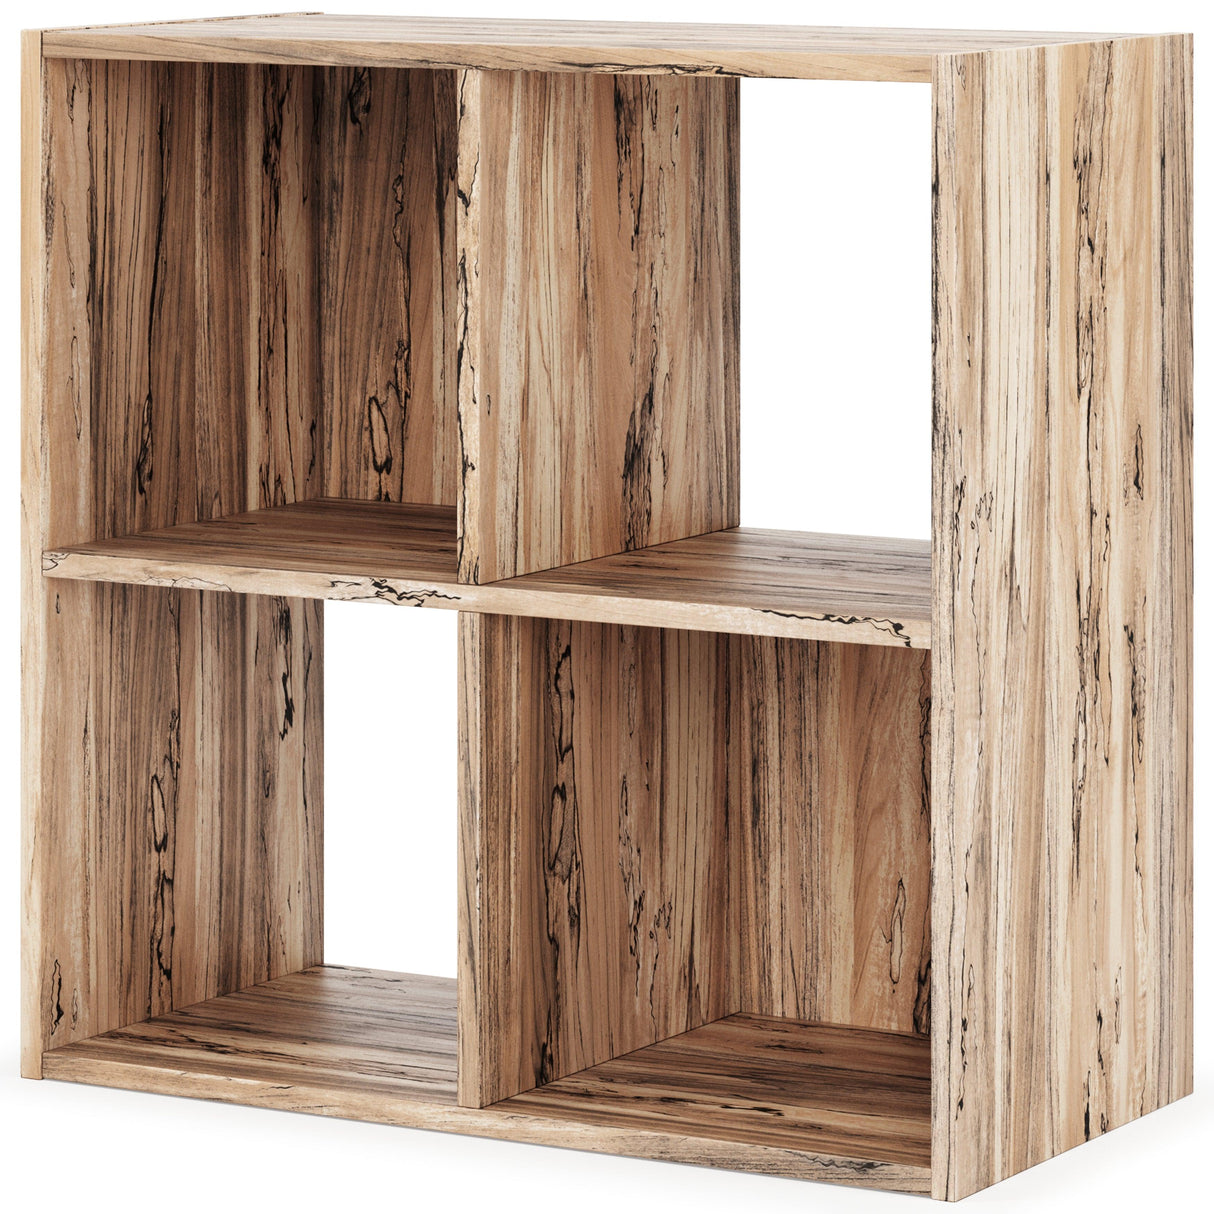 Piperton Natural Four Cube Organizer - Ella Furniture